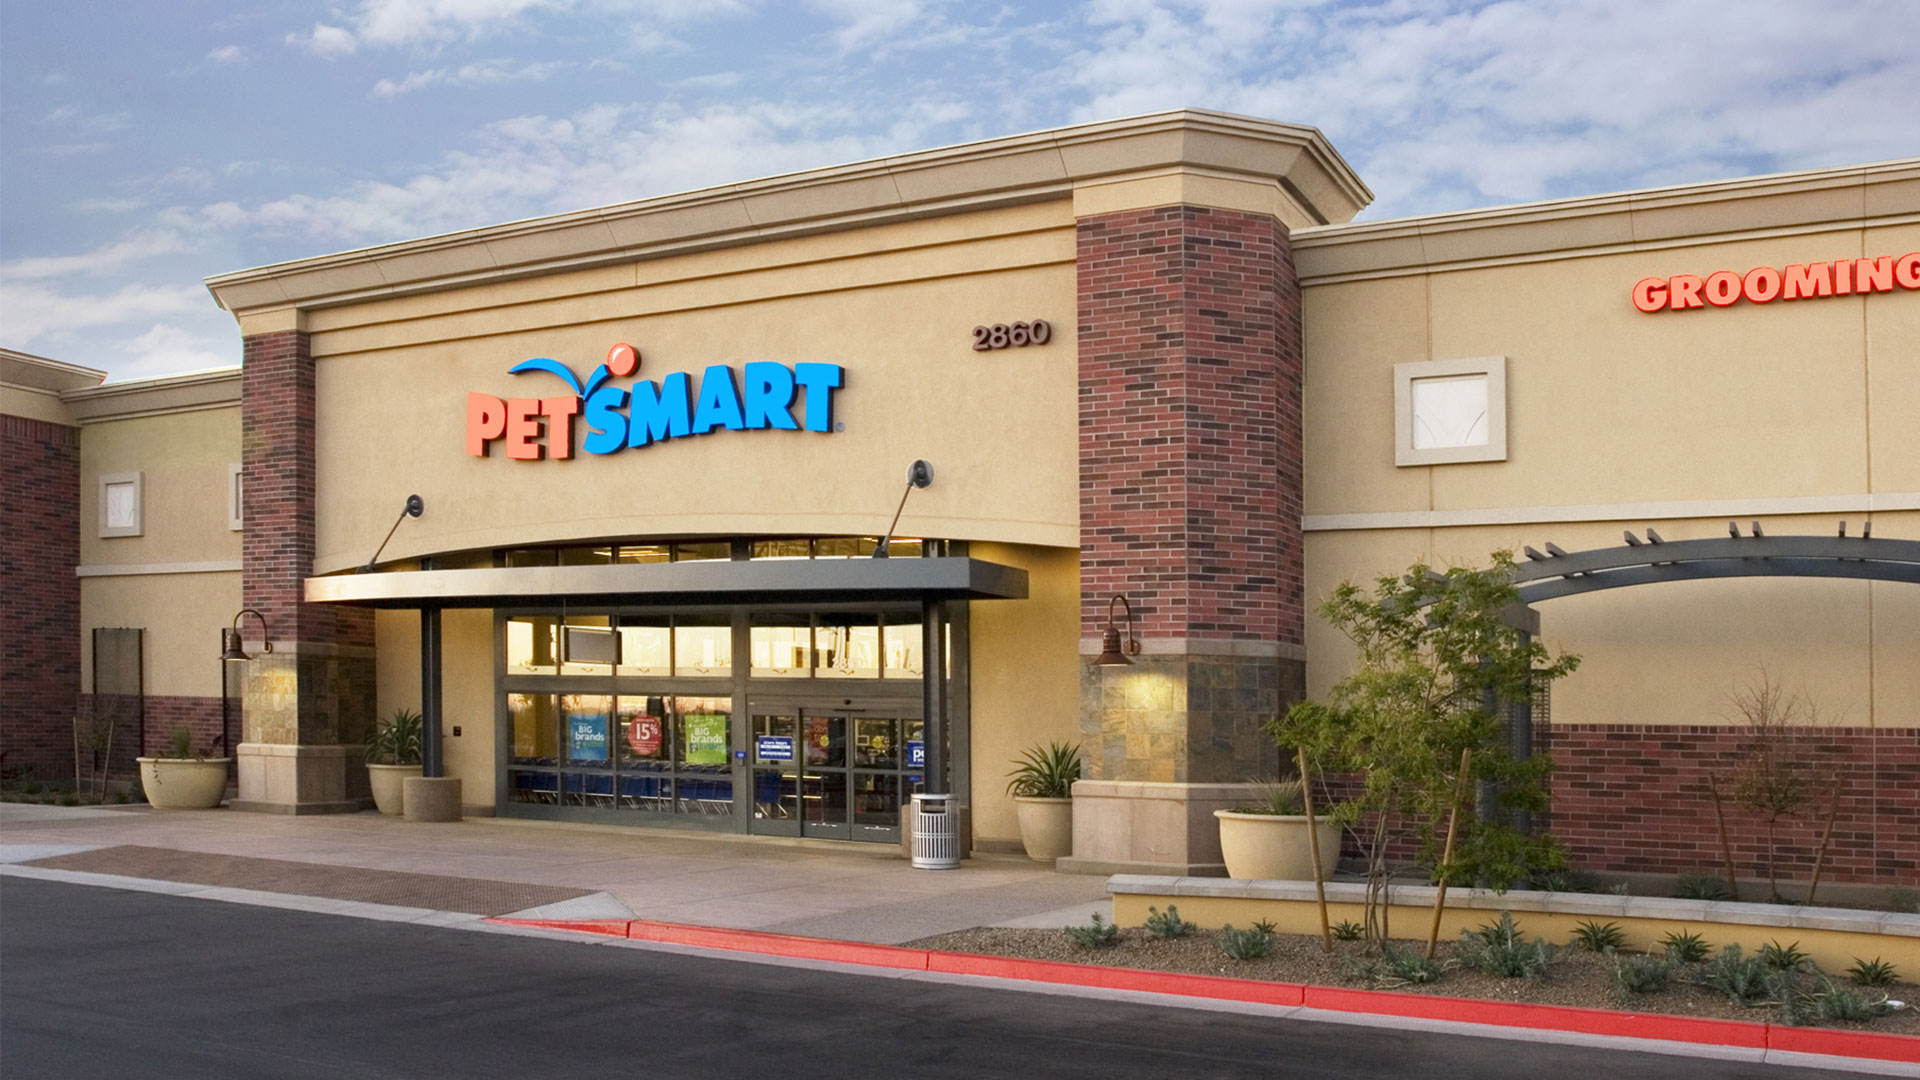 PetSmart storefront exterior